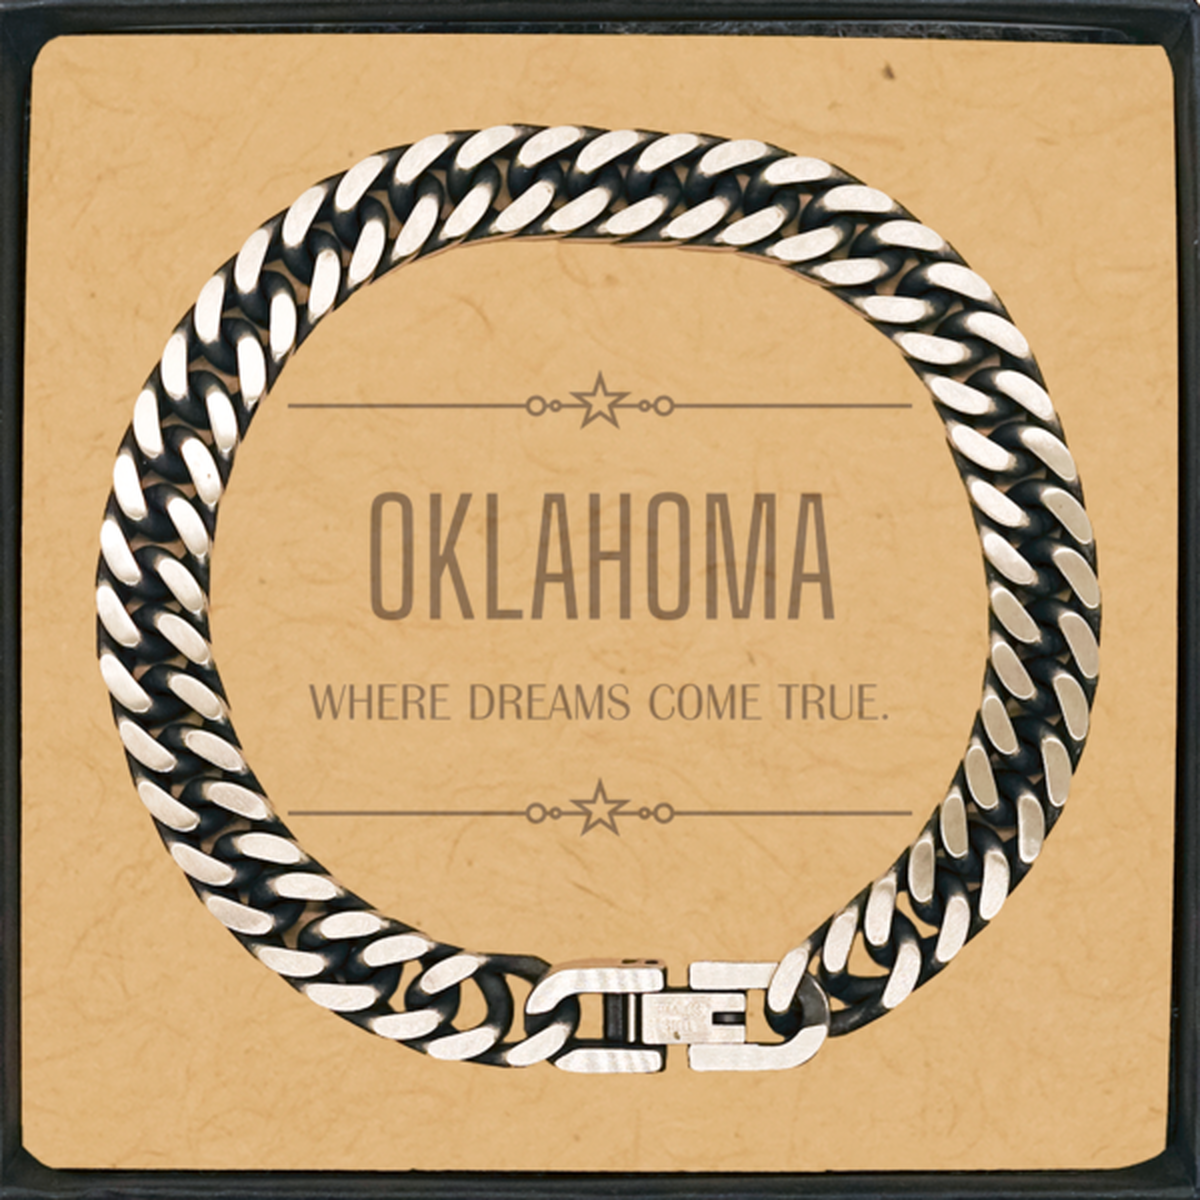 Love Oklahoma State Cuban Link Chain Bracelet, Oklahoma Where dreams come true, Birthday Inspirational Gifts For Oklahoma Men, Women, Friends